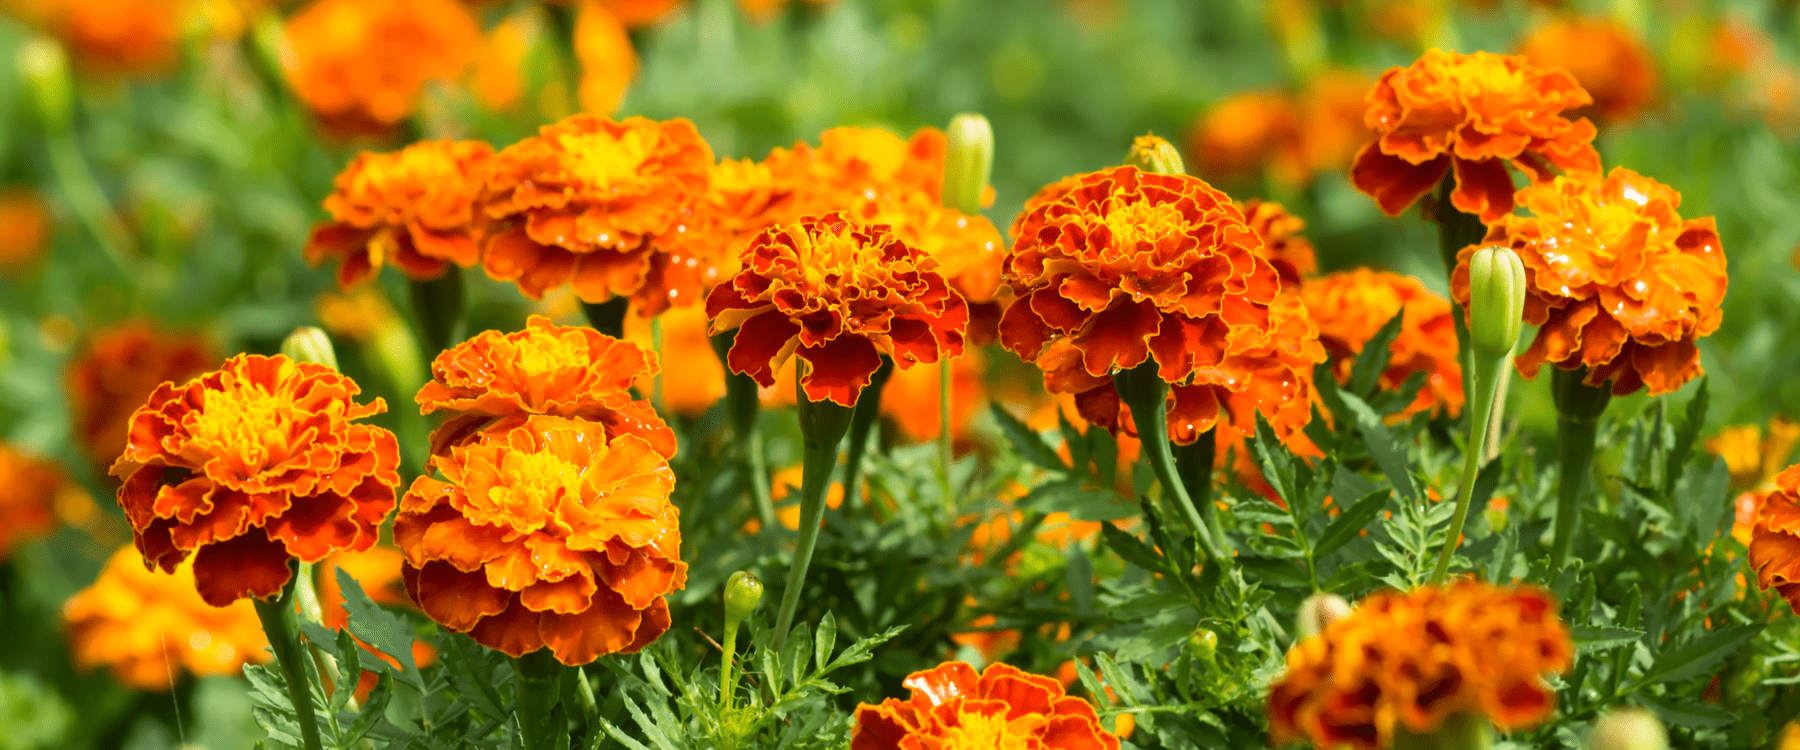 French marigolds in a garden